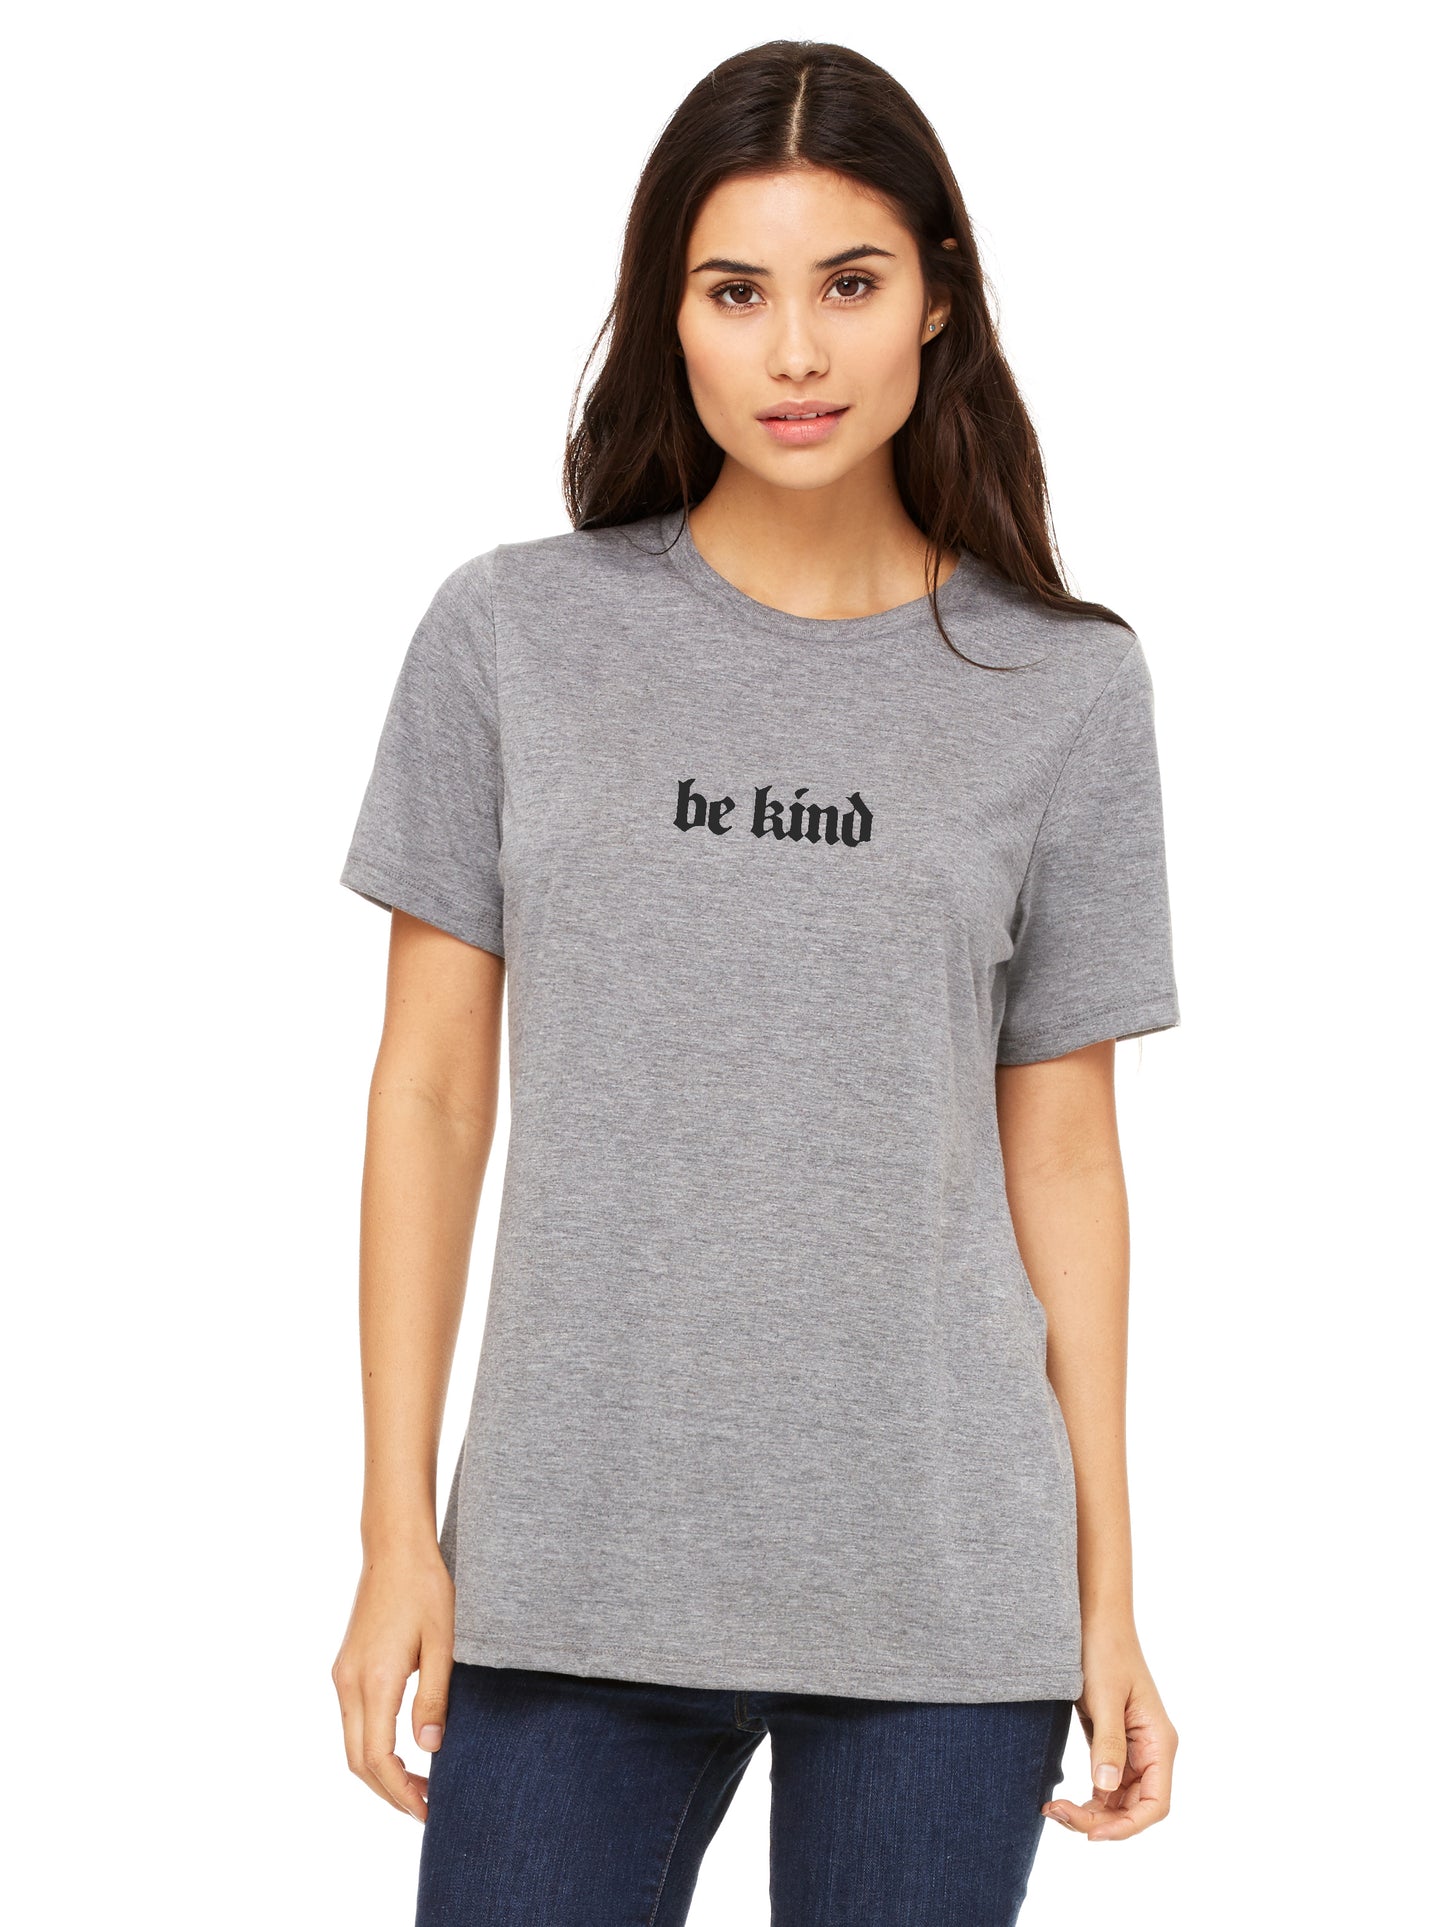 Emmalise Women's Be Kind Round Neck Short Sleeve Tru-Fit Tee Shirt